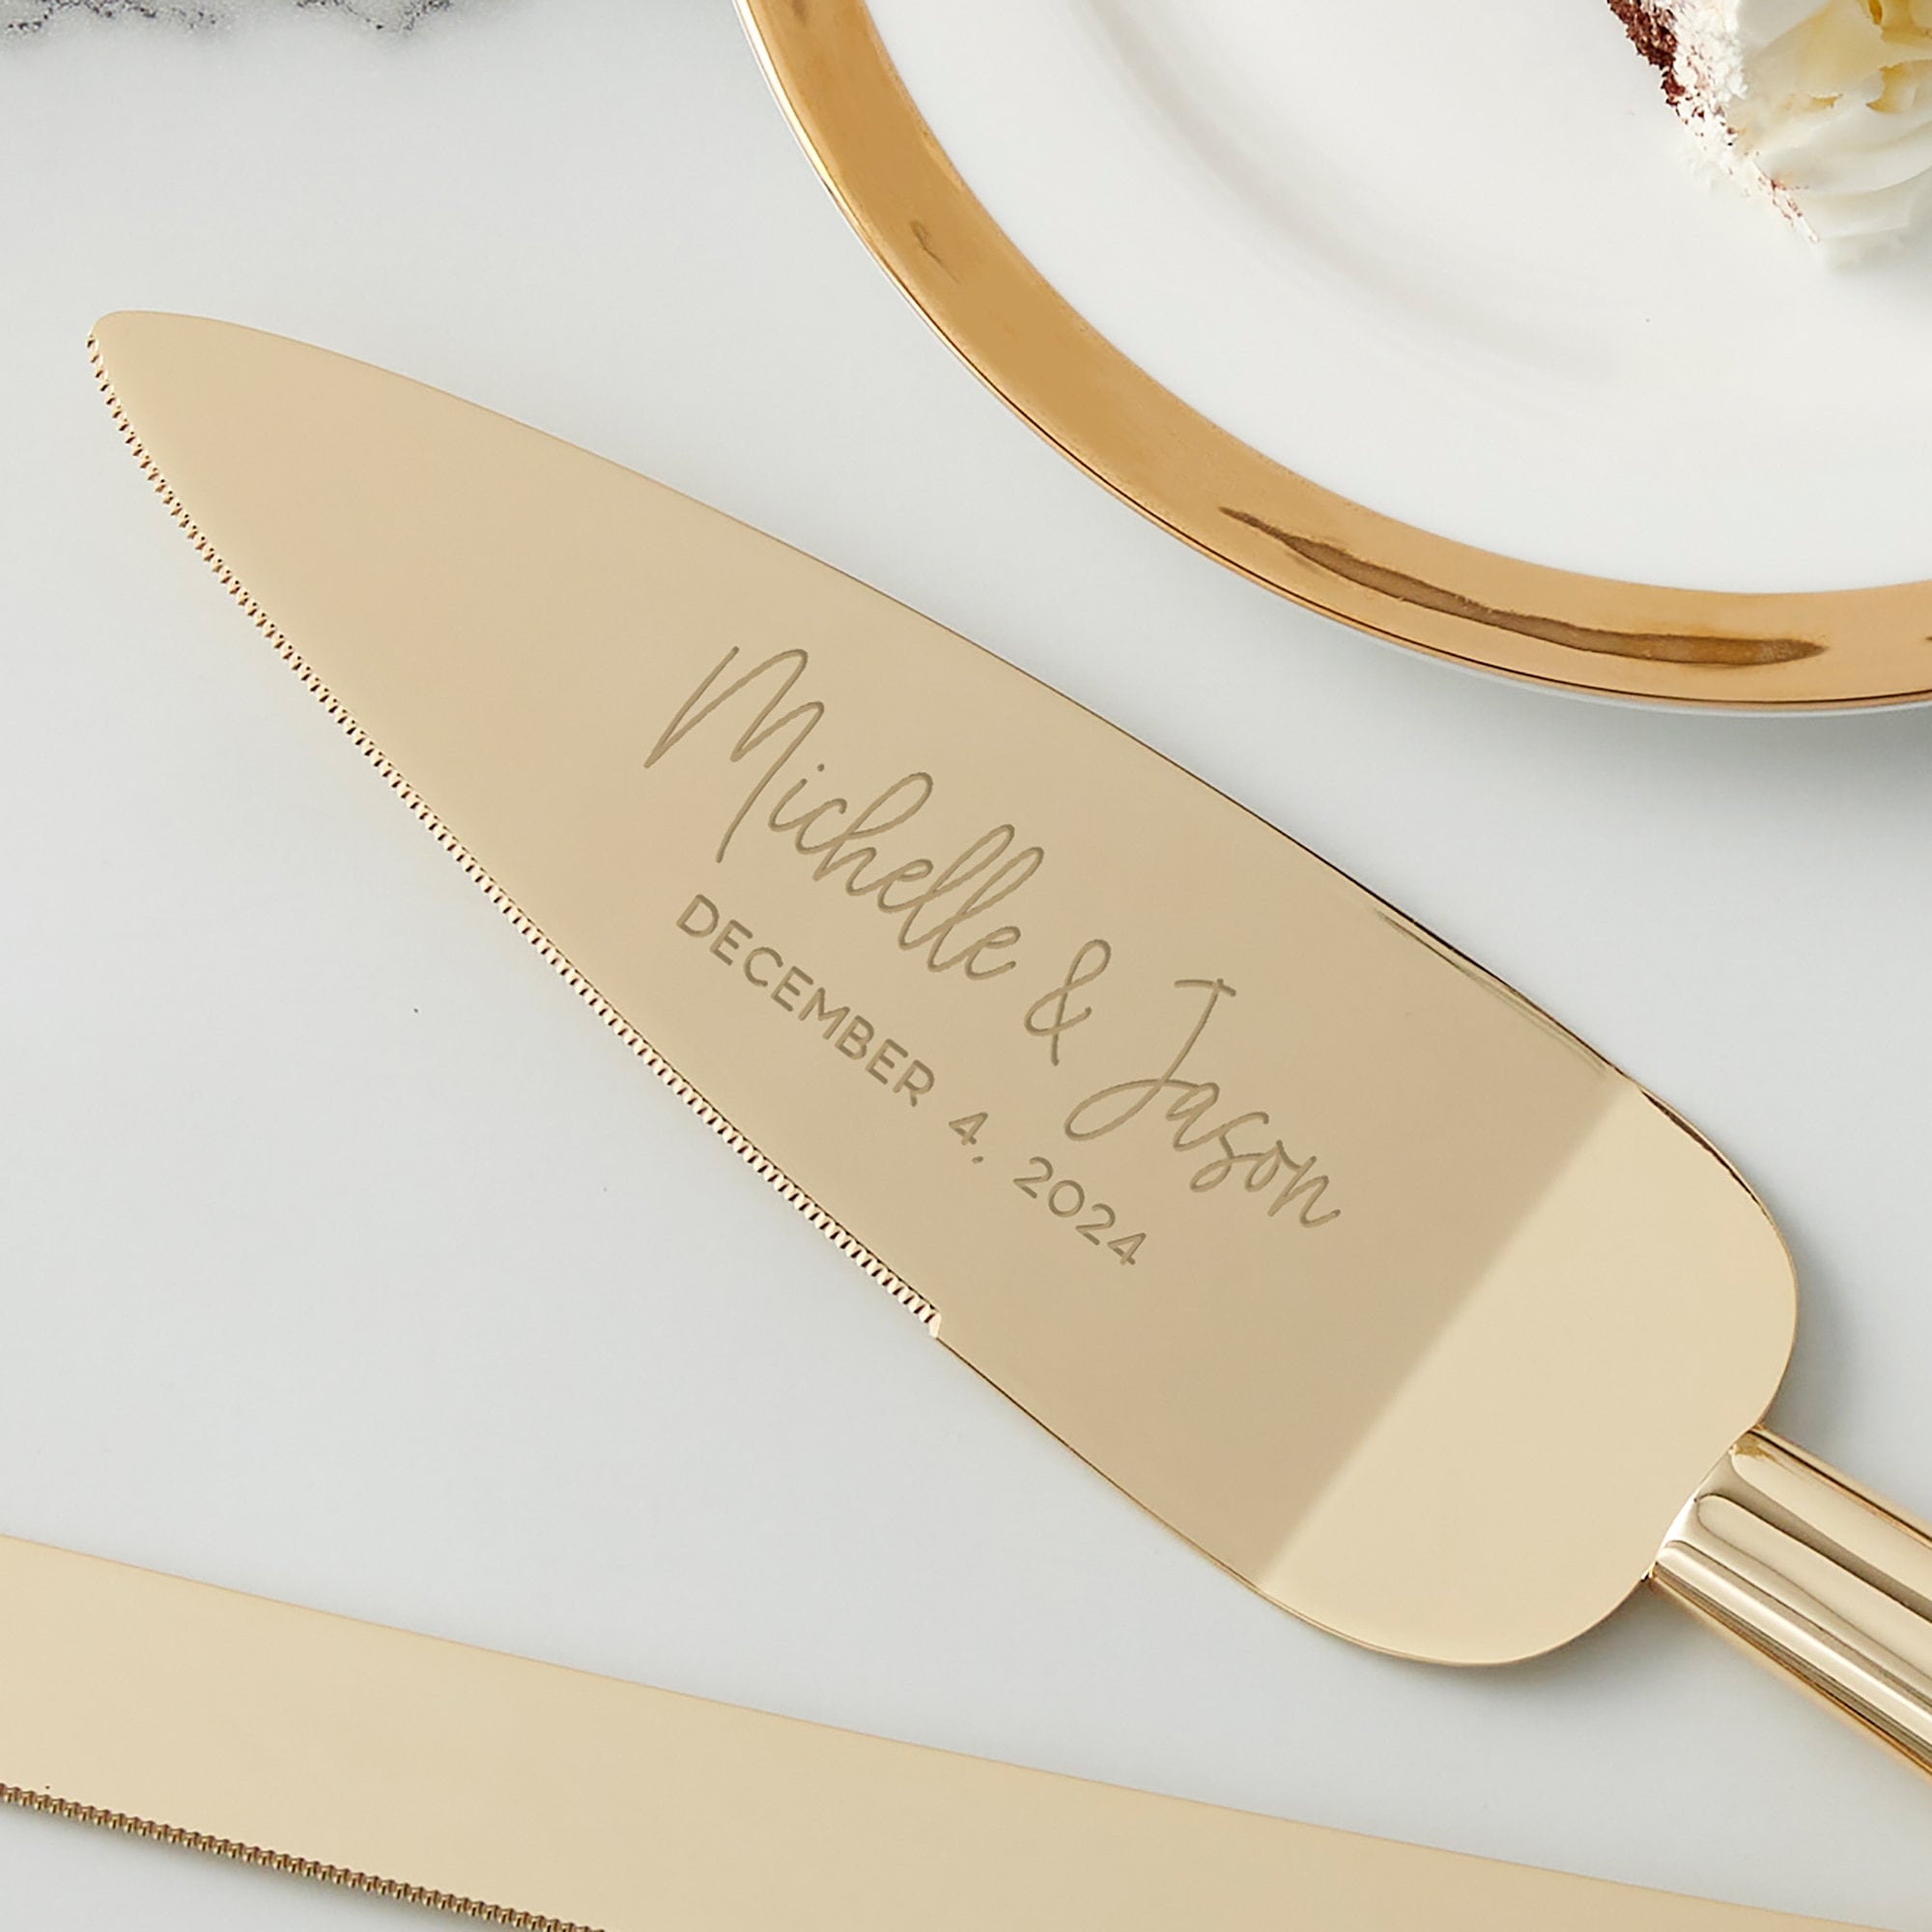 Personalized Wedding Cake Knife and Server Set White Quartz Handles  Engraved Gold Cake Serving Set Black Wedding Cake Knife and Server 